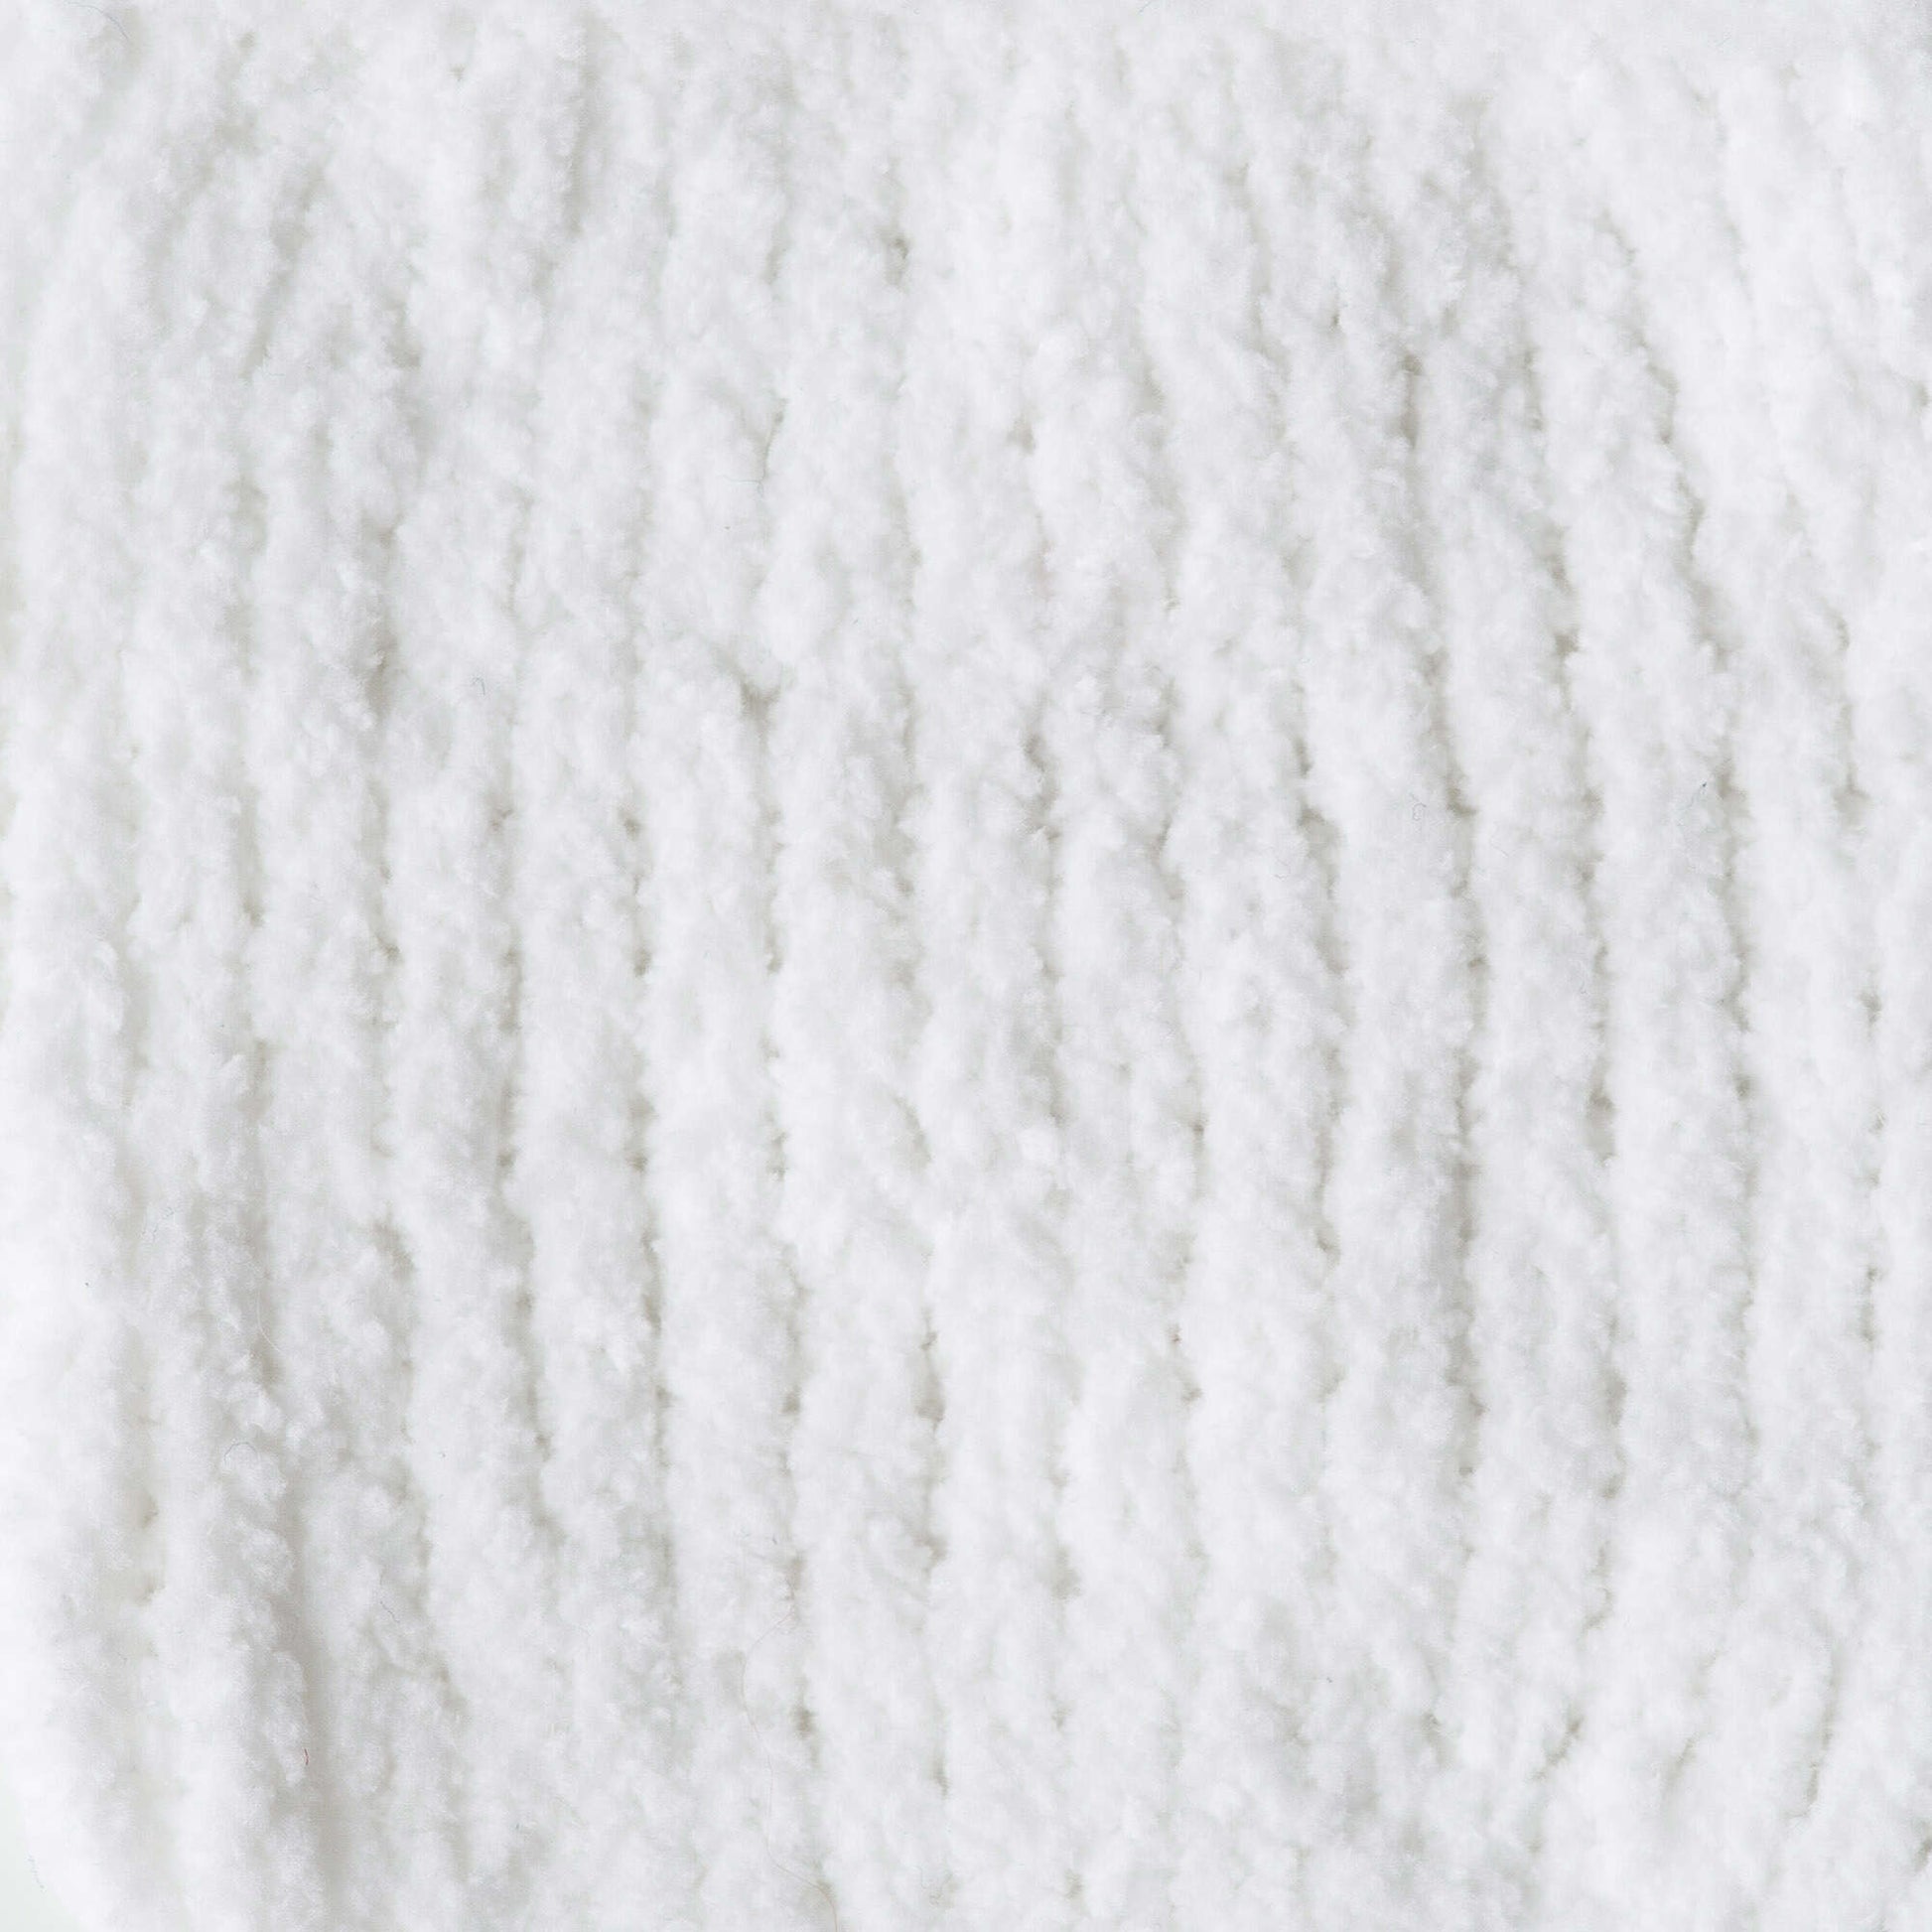 Bernat Baby Blanket Tiny Yarn - Discontinued Shades